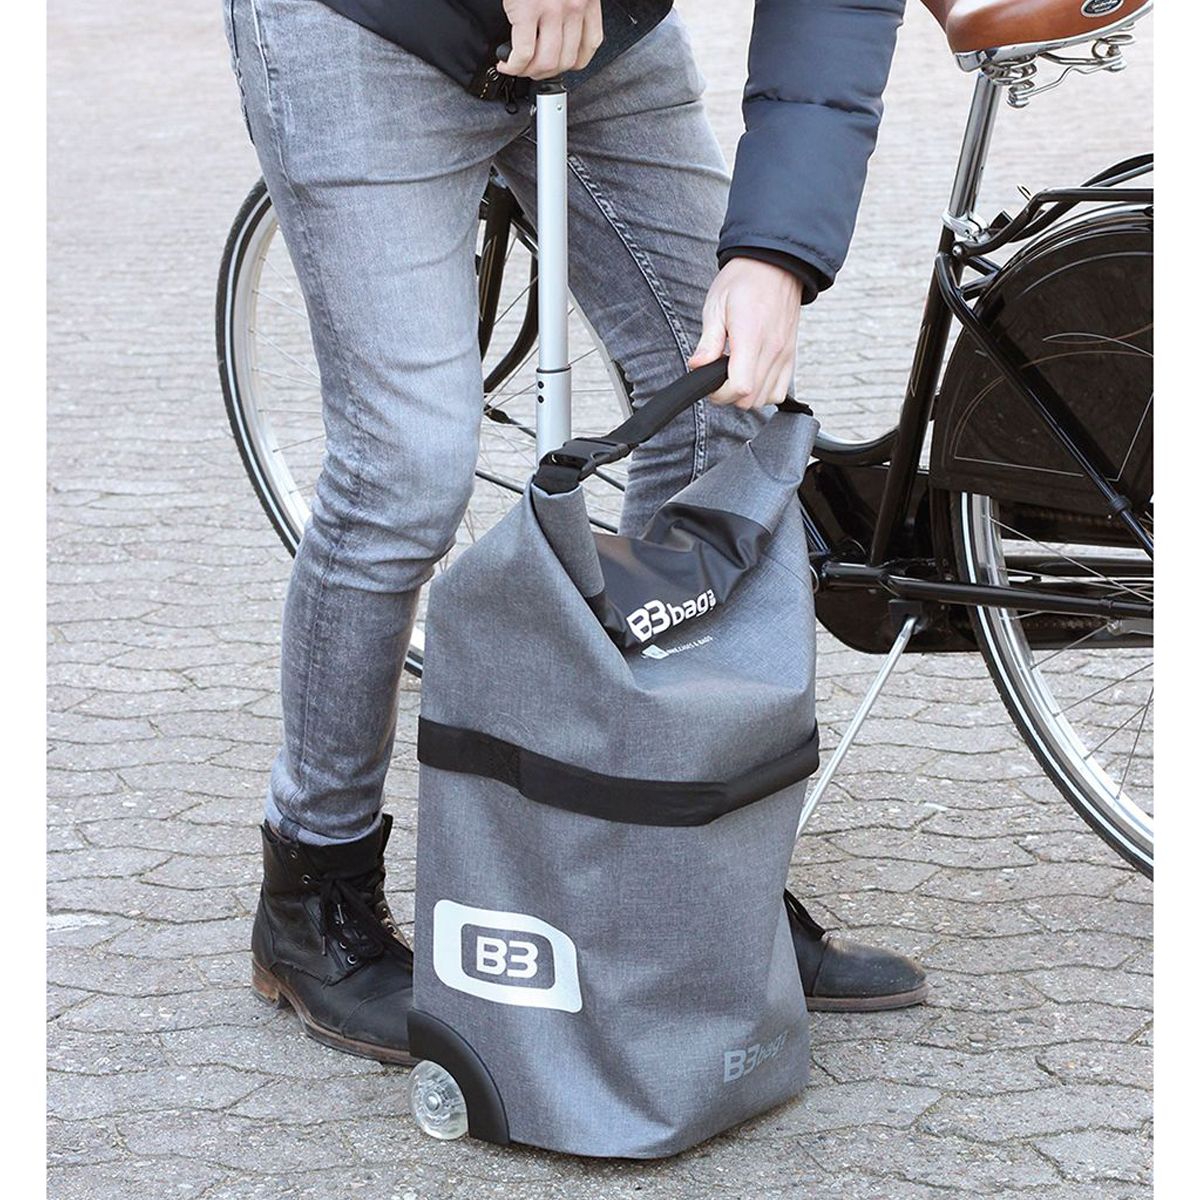 B & W B3 Waterproof Bag with Wheels-B & W-Chain Driven Cycles-Bike Shop-Ireland